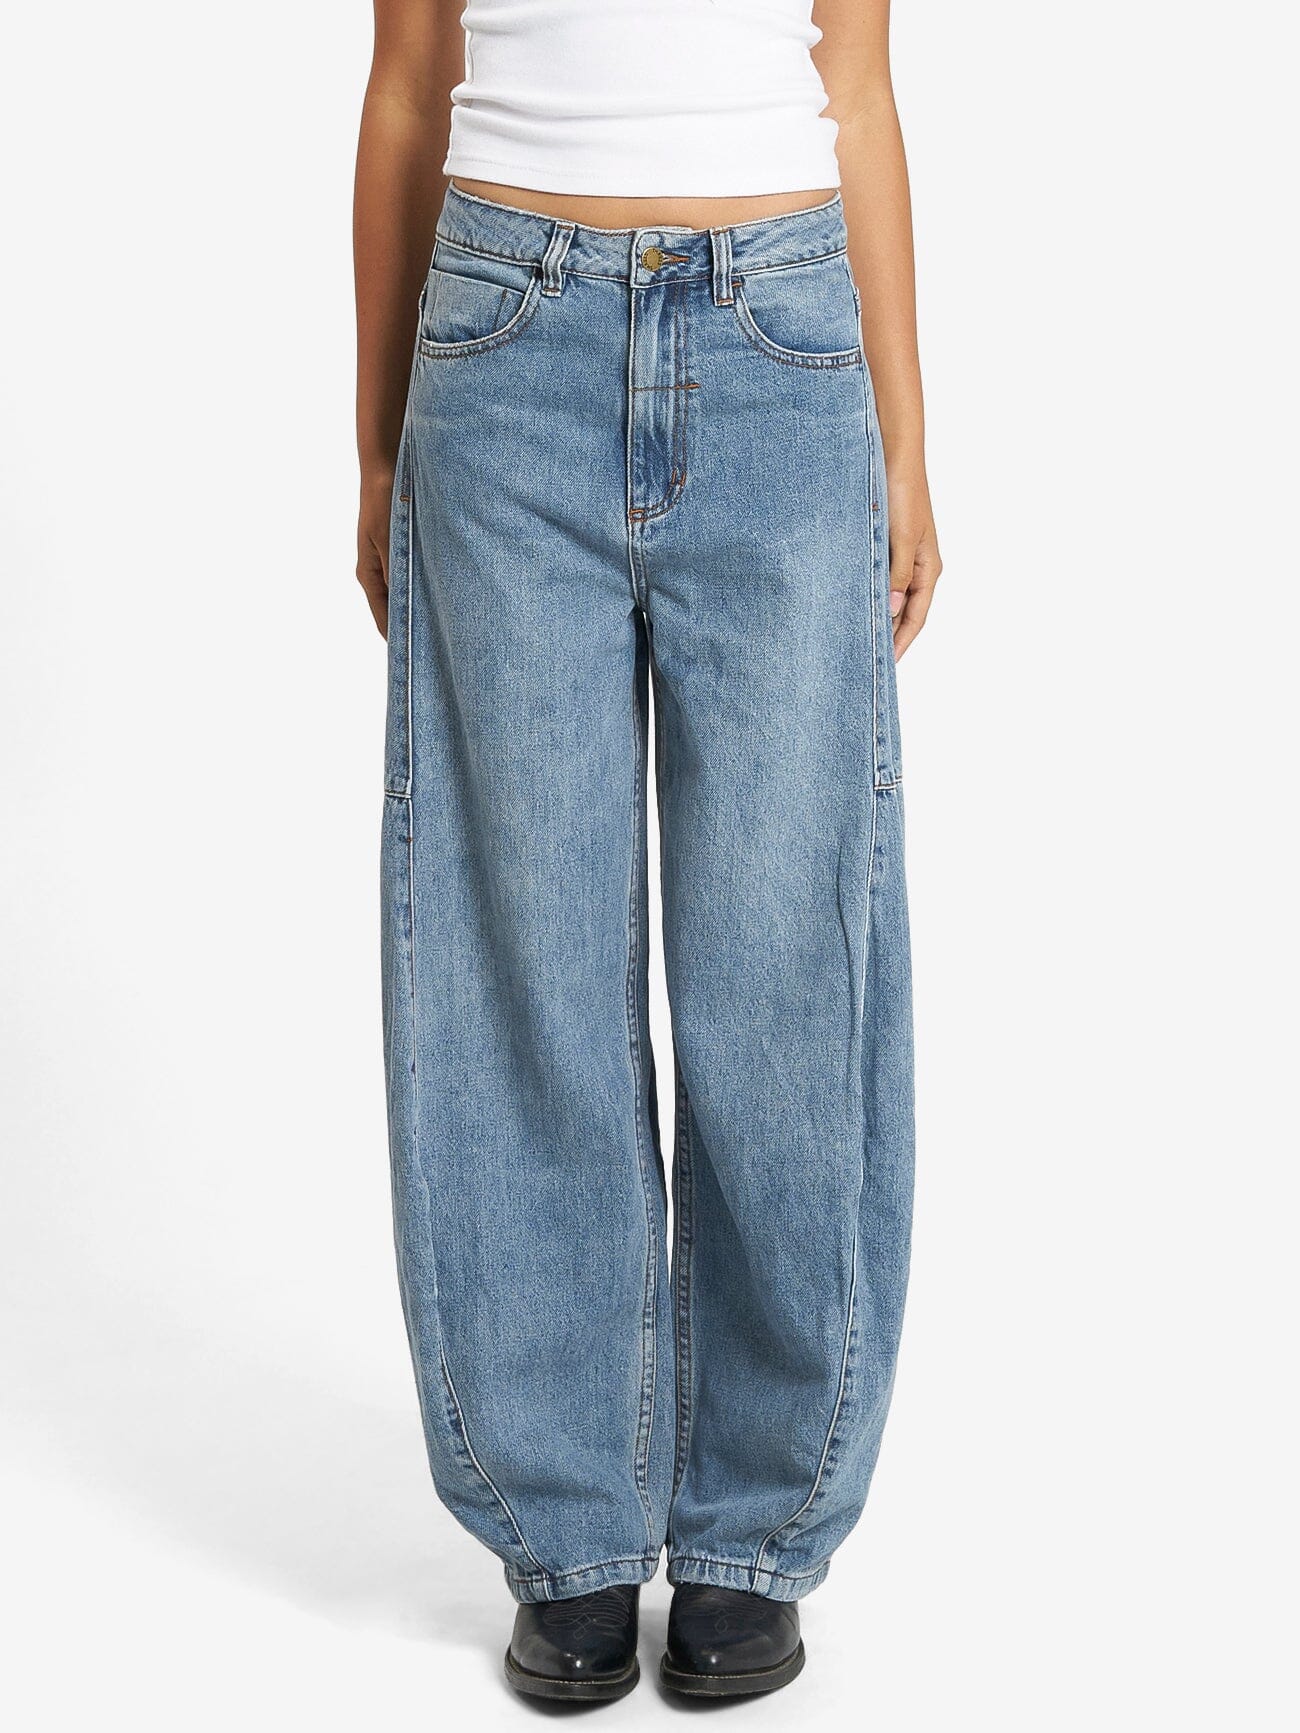 Womens Baggy Jeans / Pants - Australia